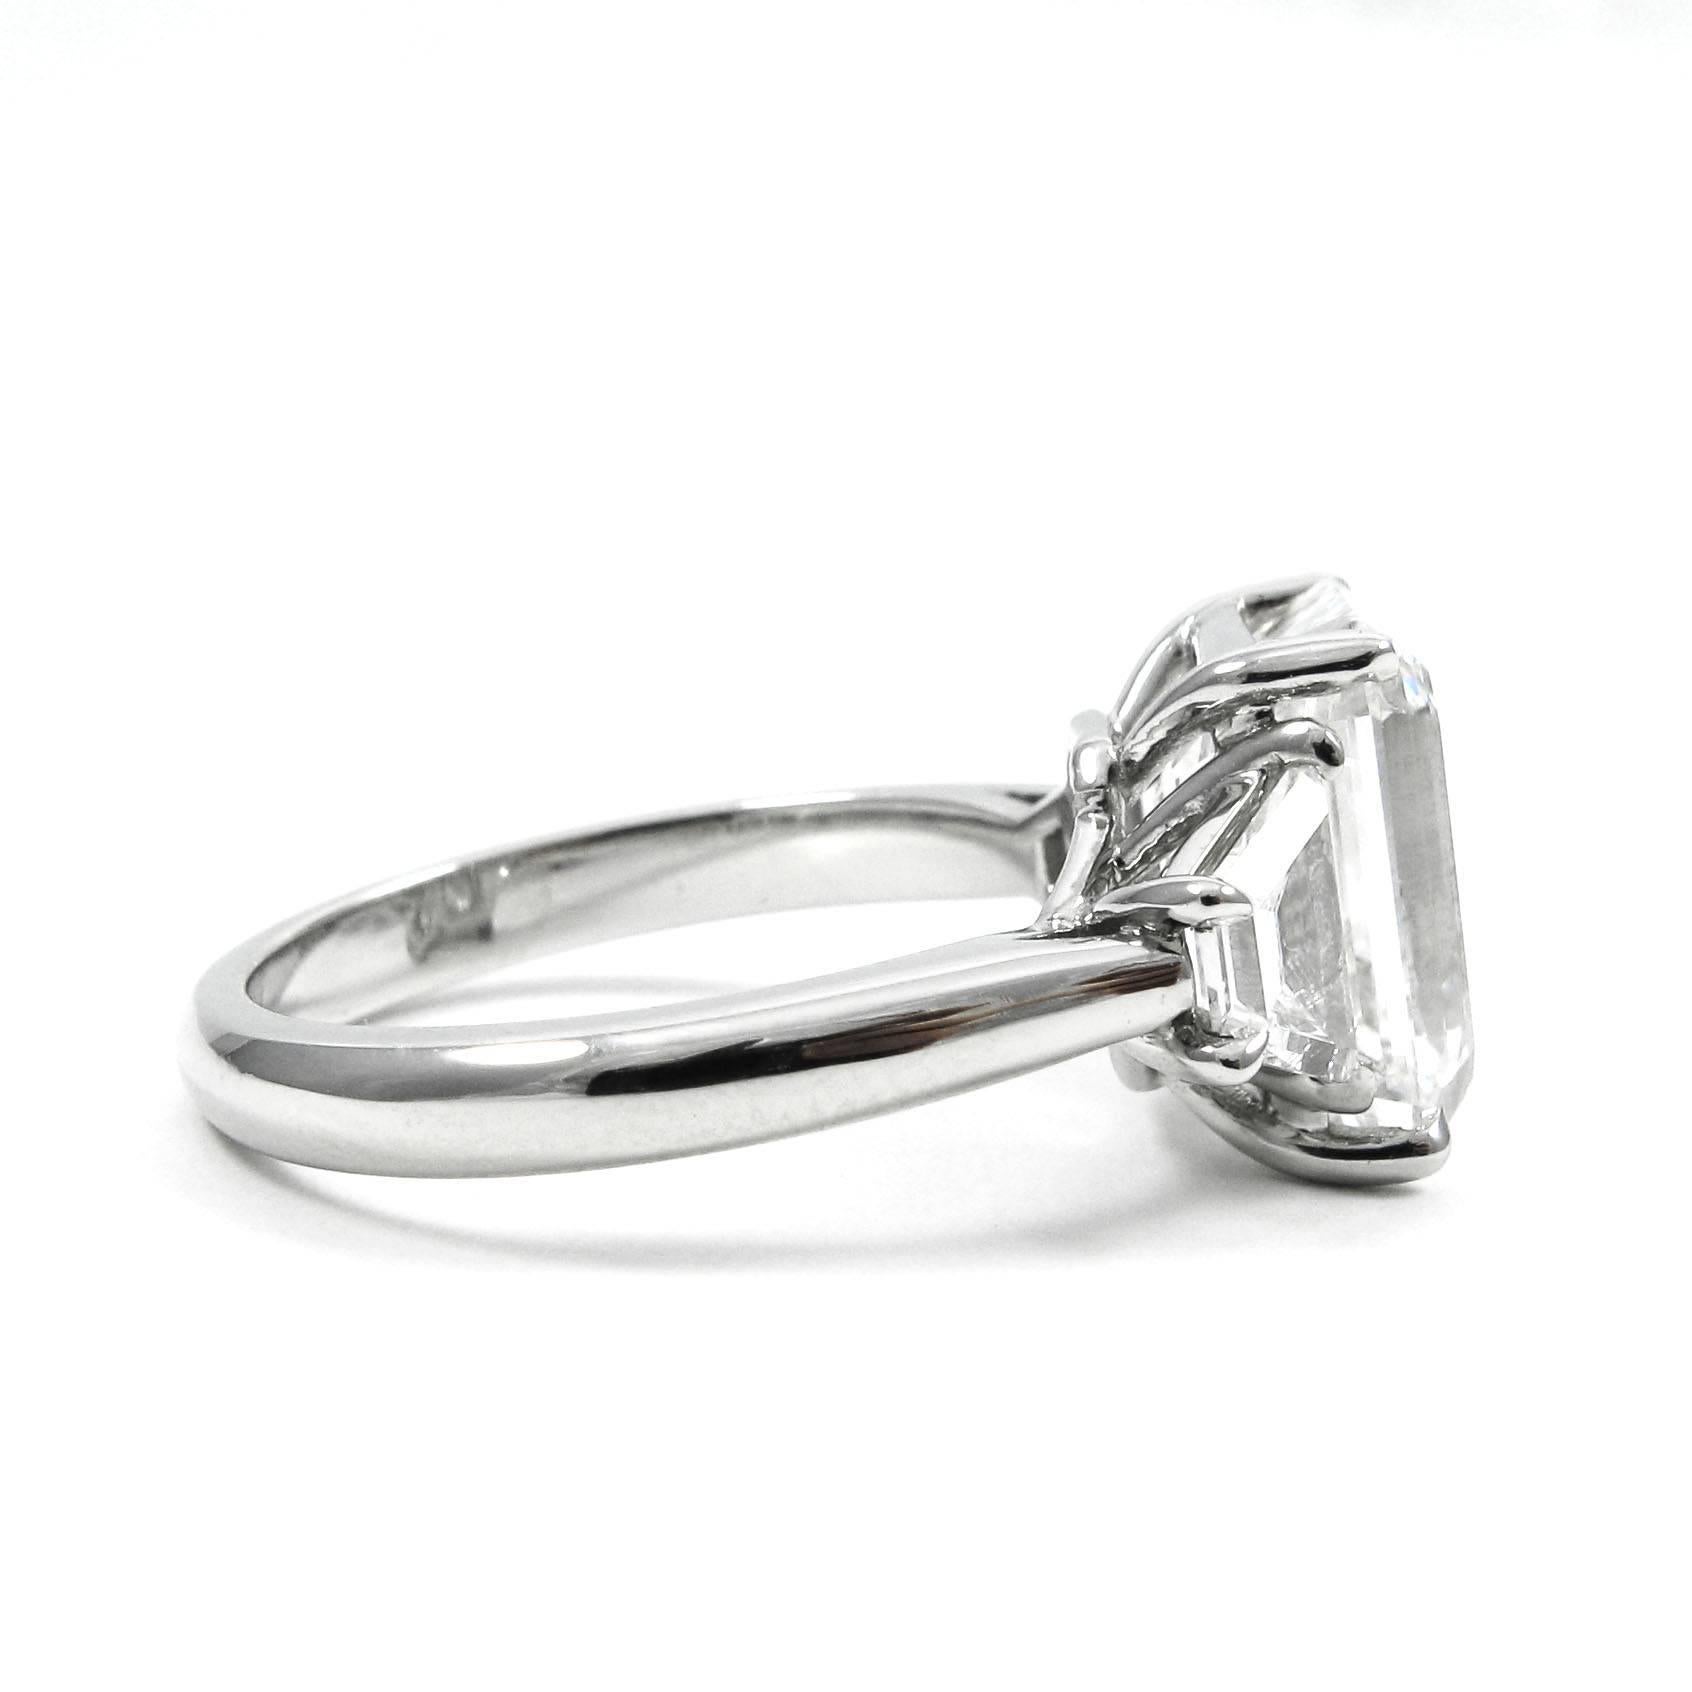 Women's GIA Certified 4.70 Carat G VVS2 Emerald Cut Diamond Platinum Ring by J Birnbach